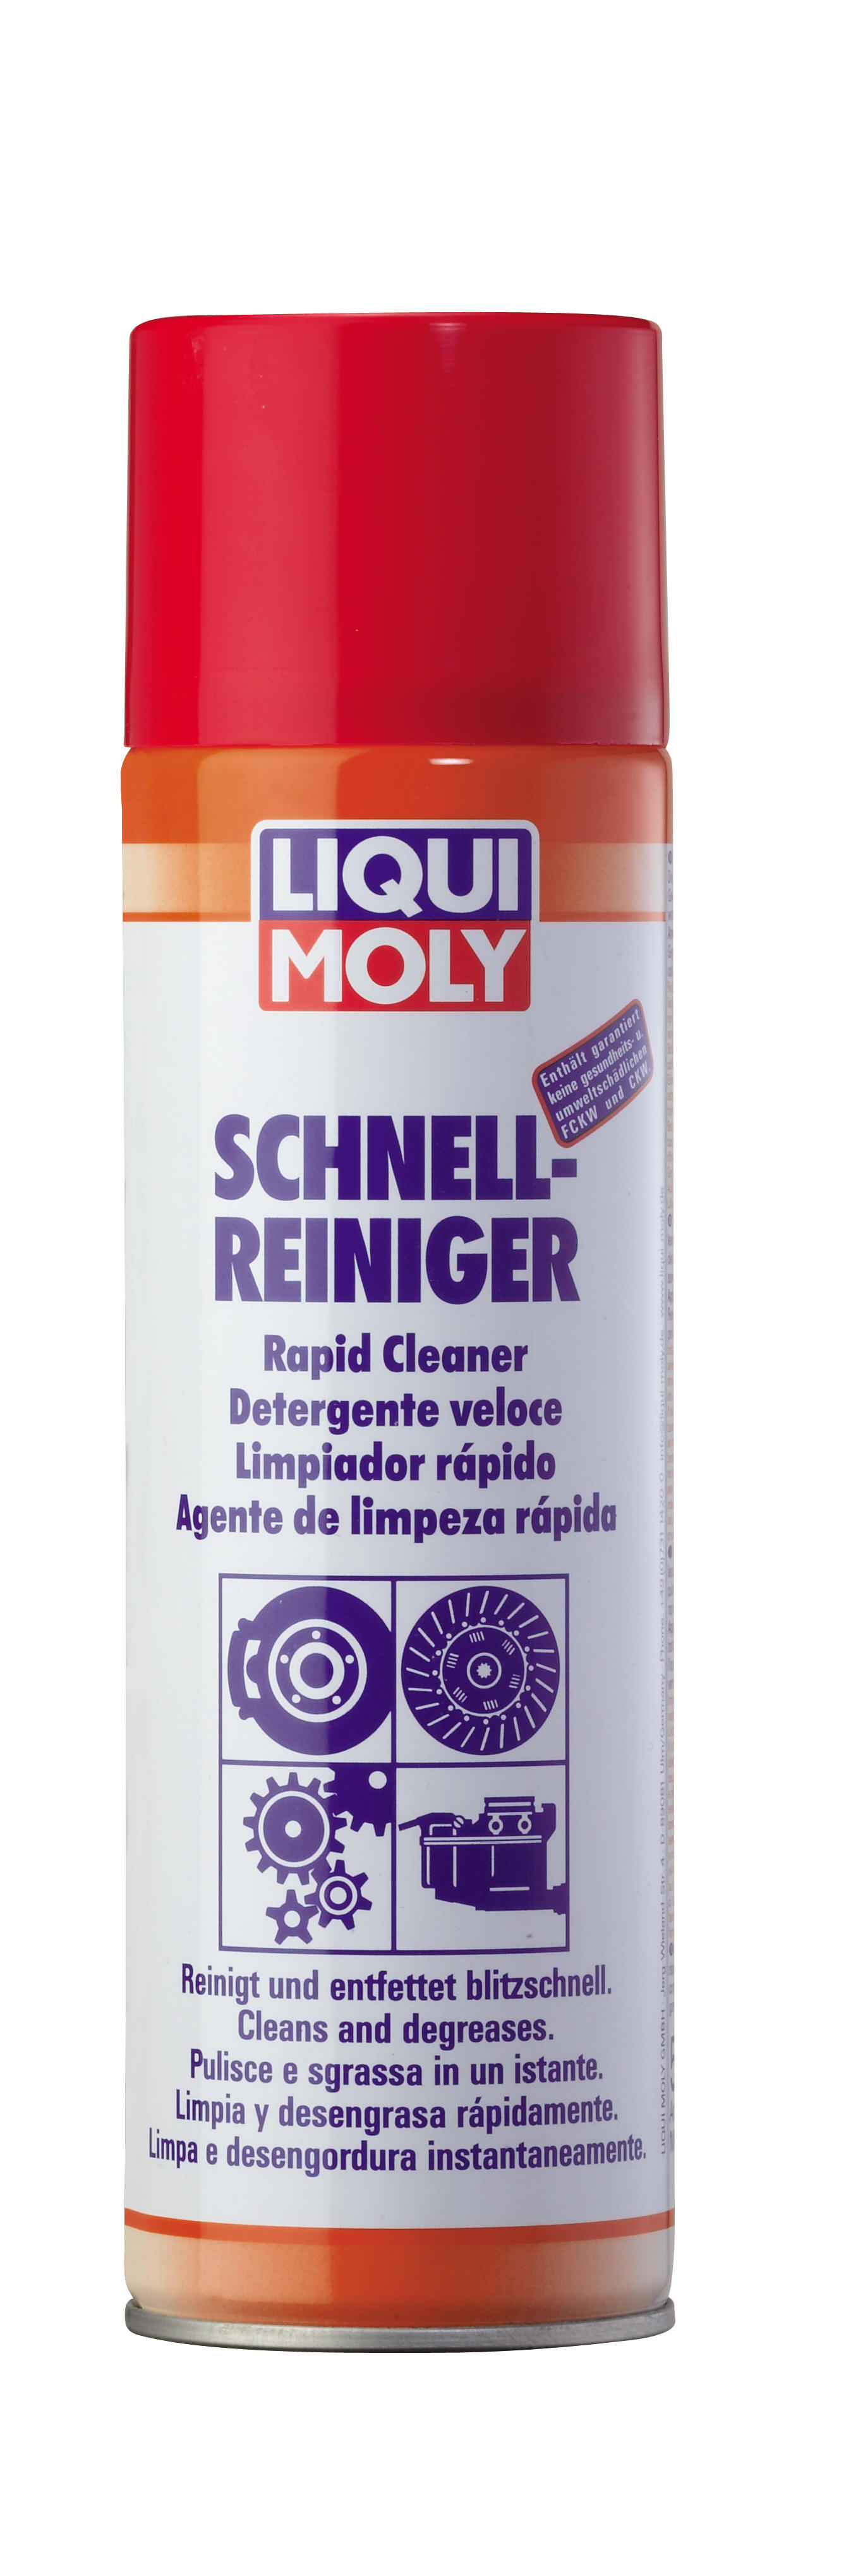 Очиститель быстрый Schnell-Reiniger, 500мл - Liqui Moly 3318